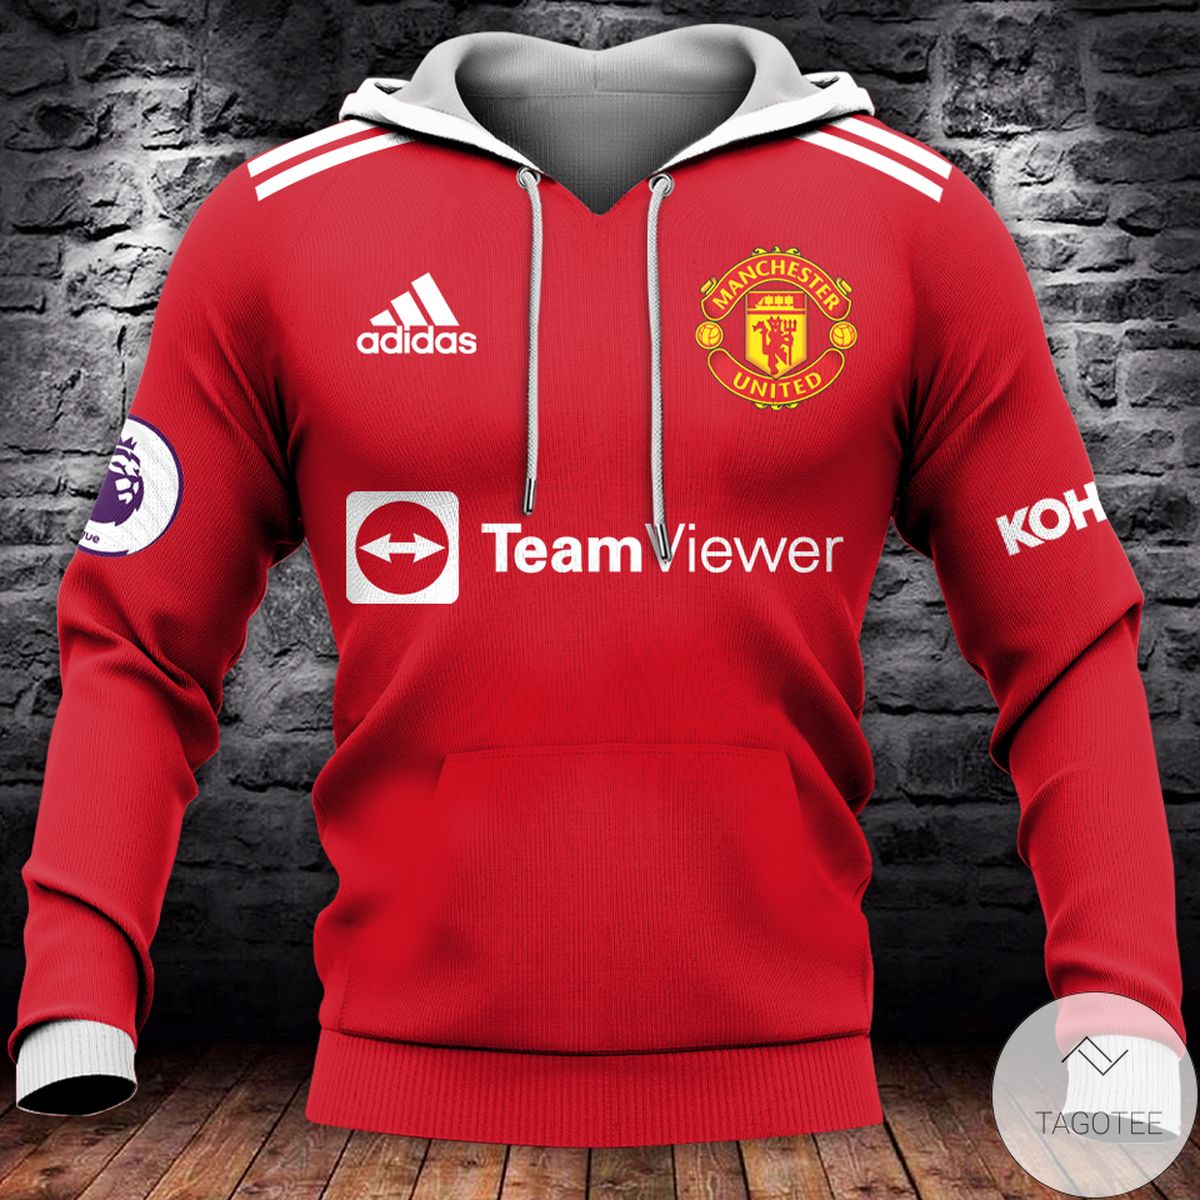 Adidas Manchester United Teamviewer 3d Hoodie